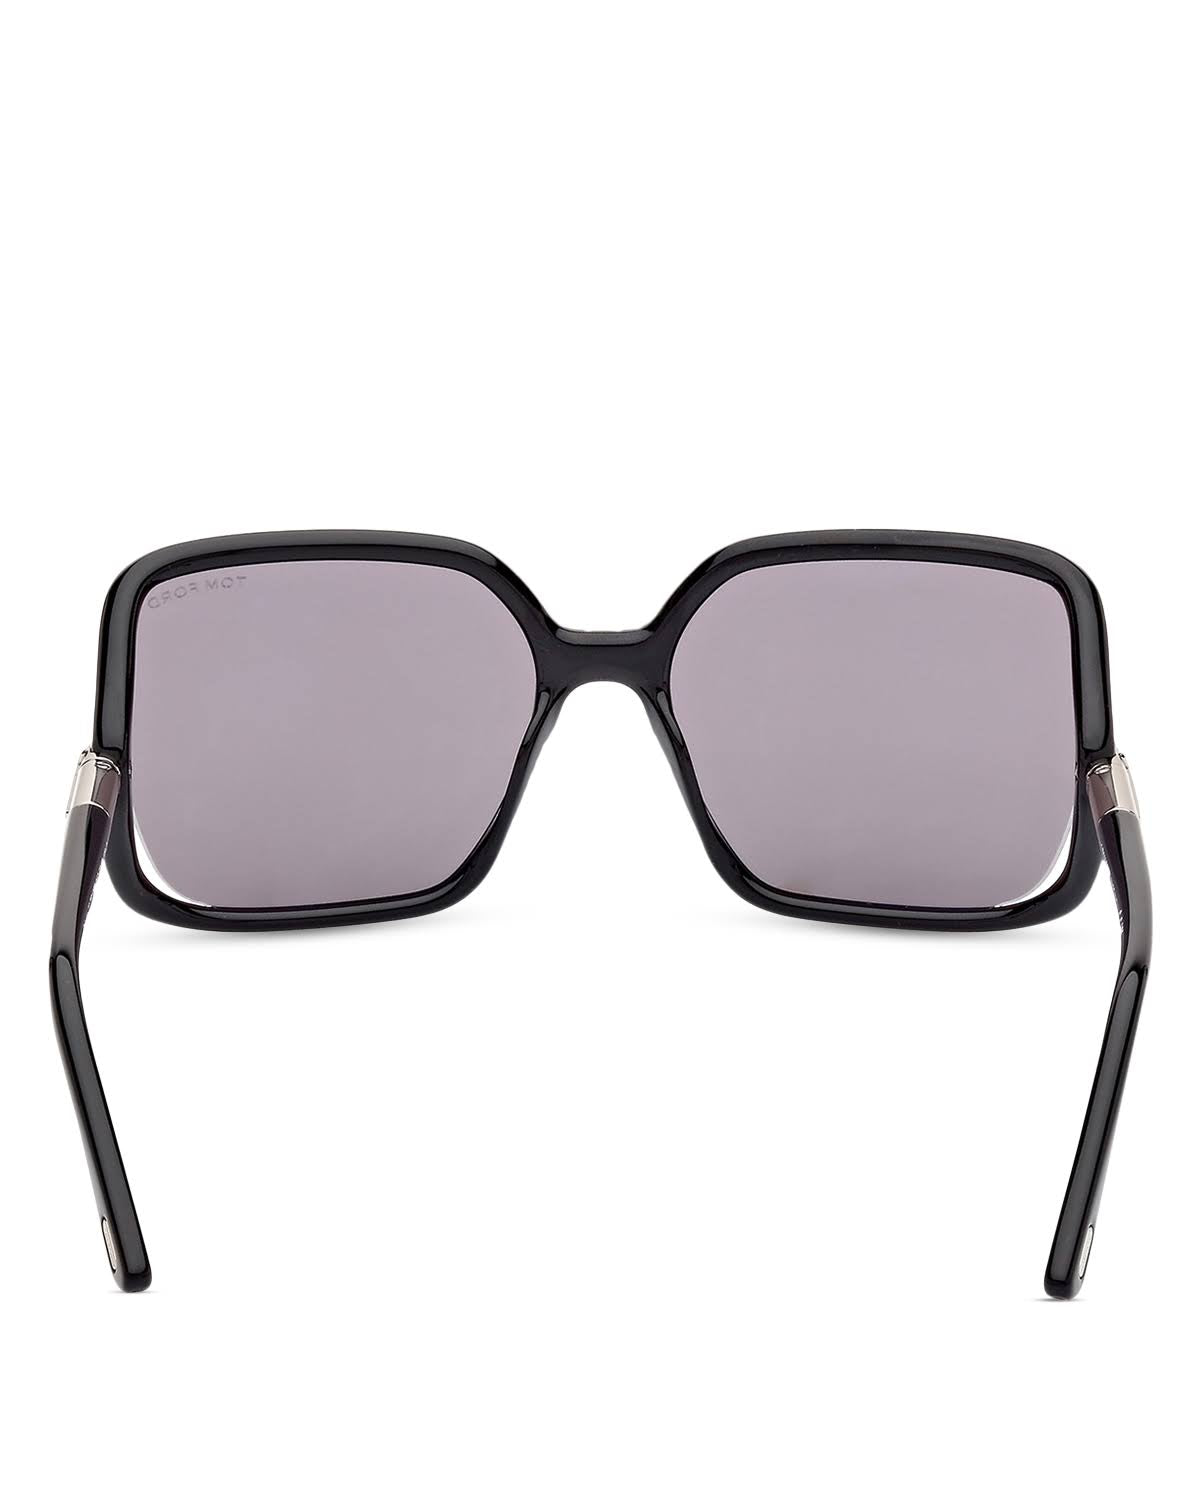 Tom Ford Solange-02 TF1069 01C Black Sunglasses